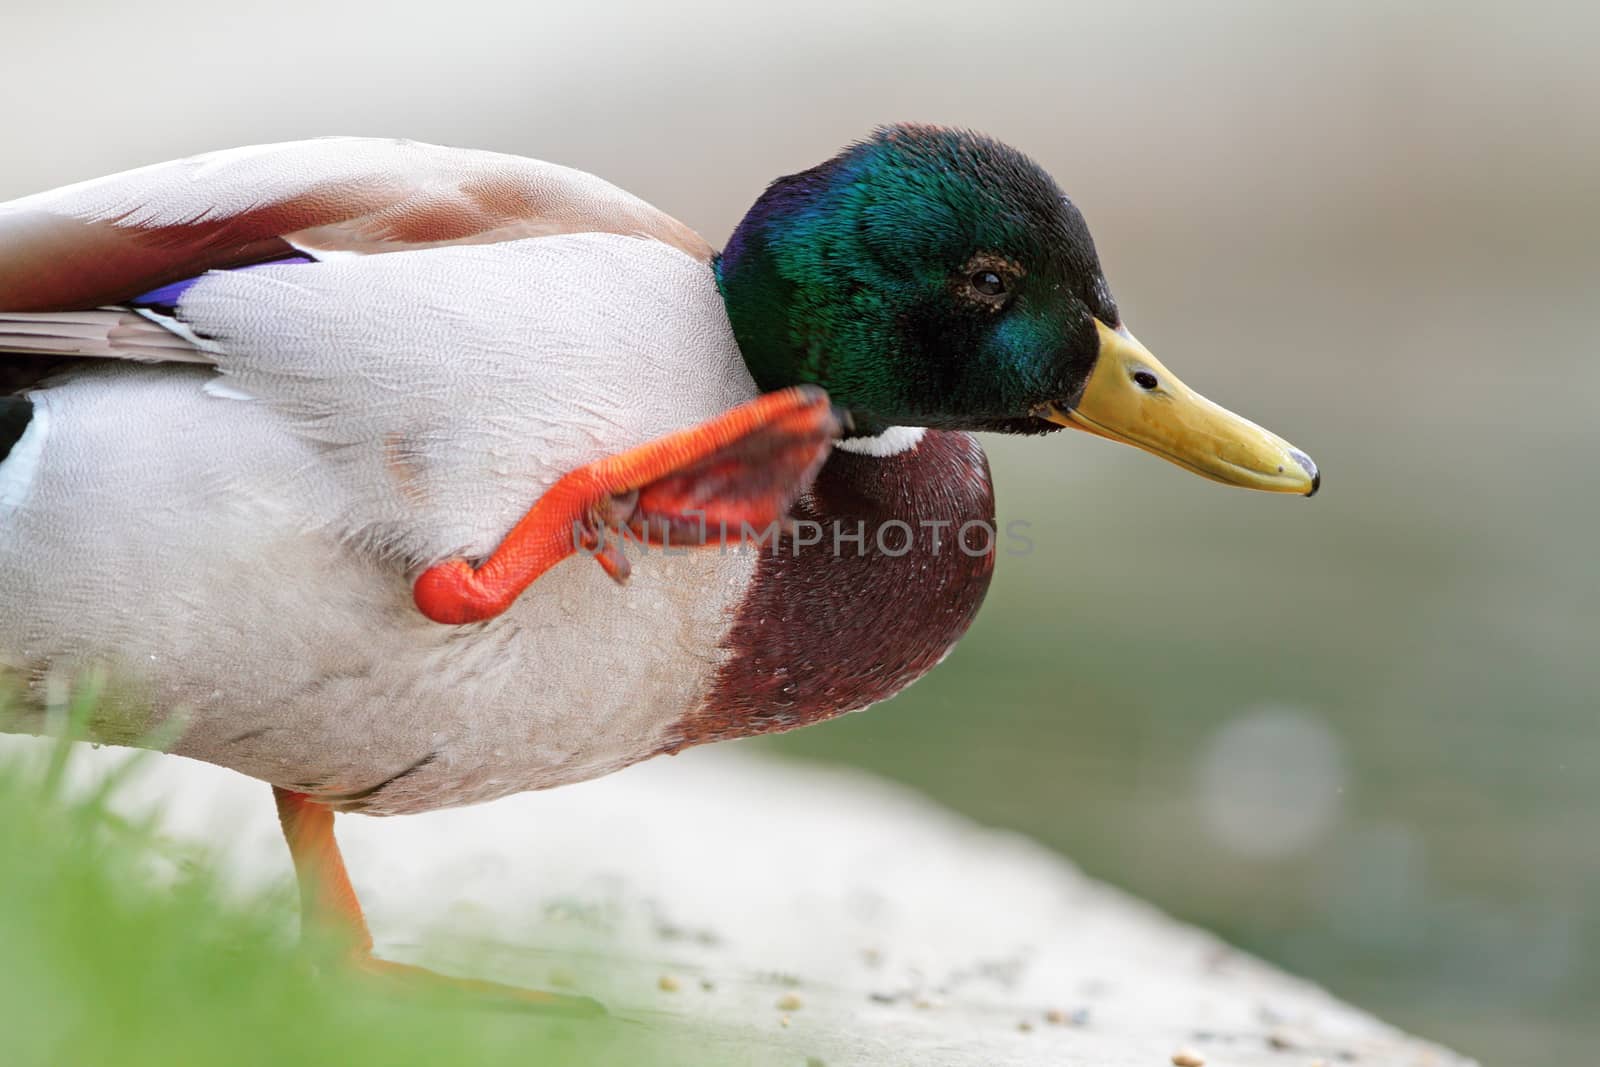 wild duck scratching its head by taviphoto